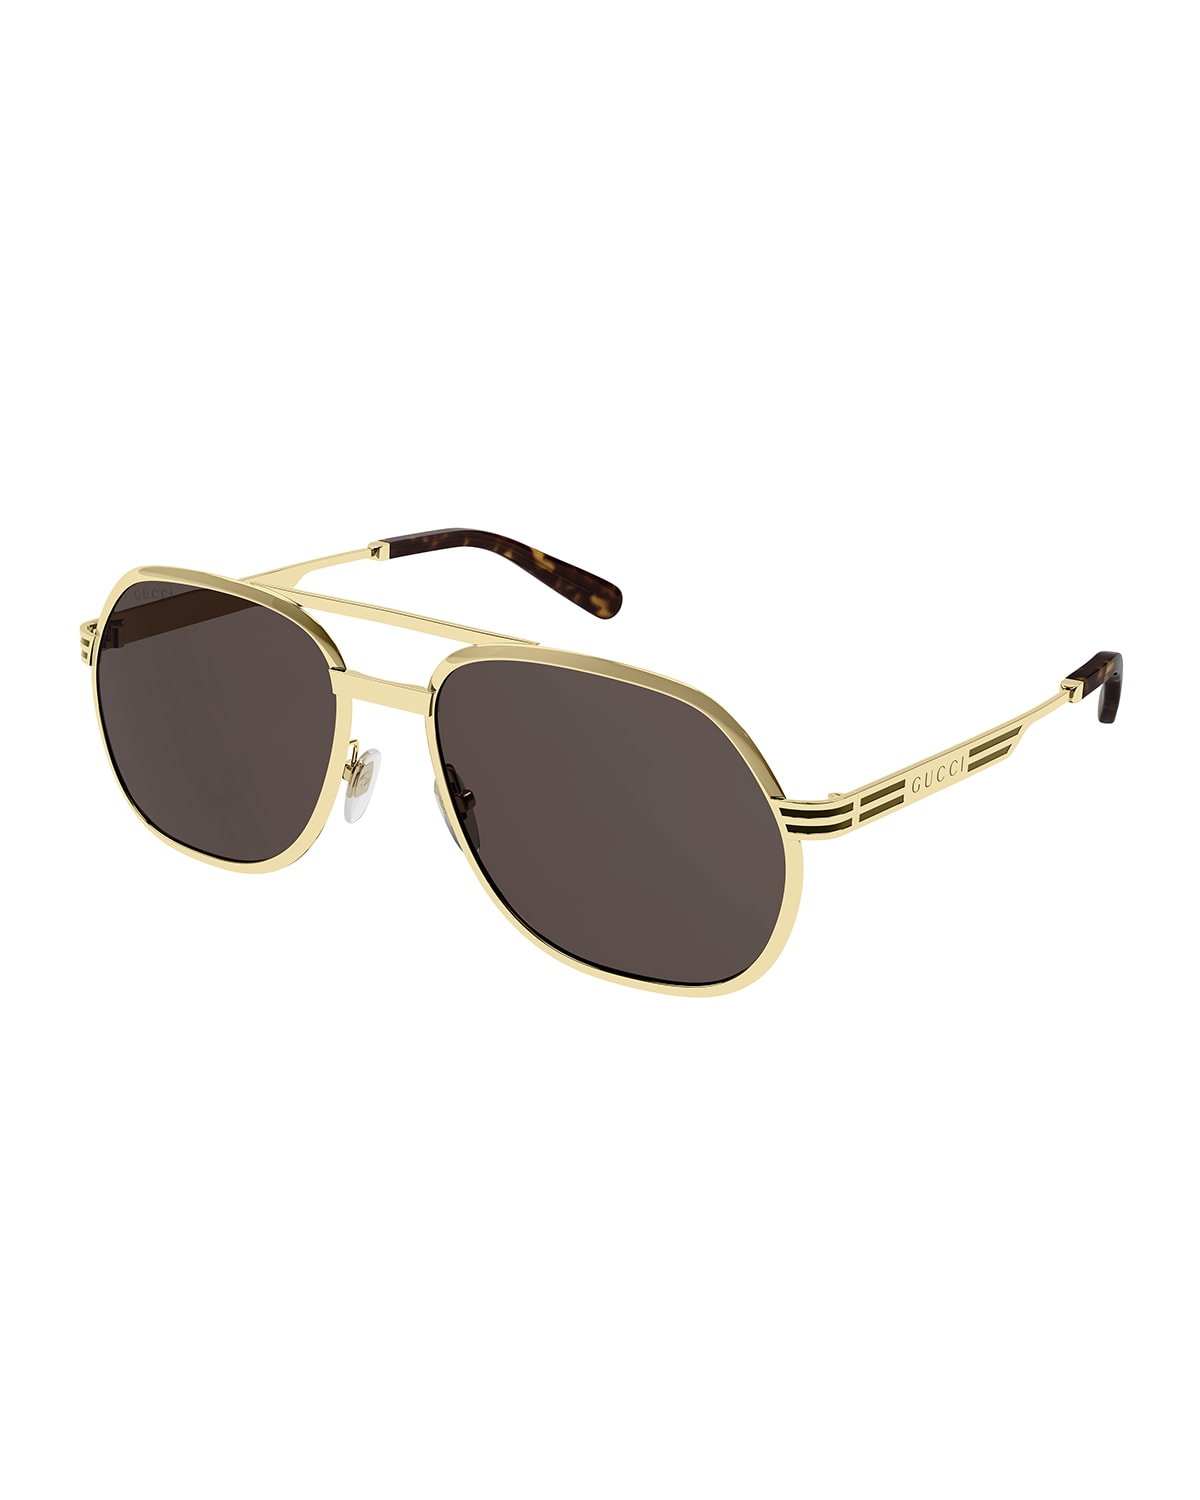 Gucci Men's Geo Double-Bridge Sunglasses | Neiman Marcus